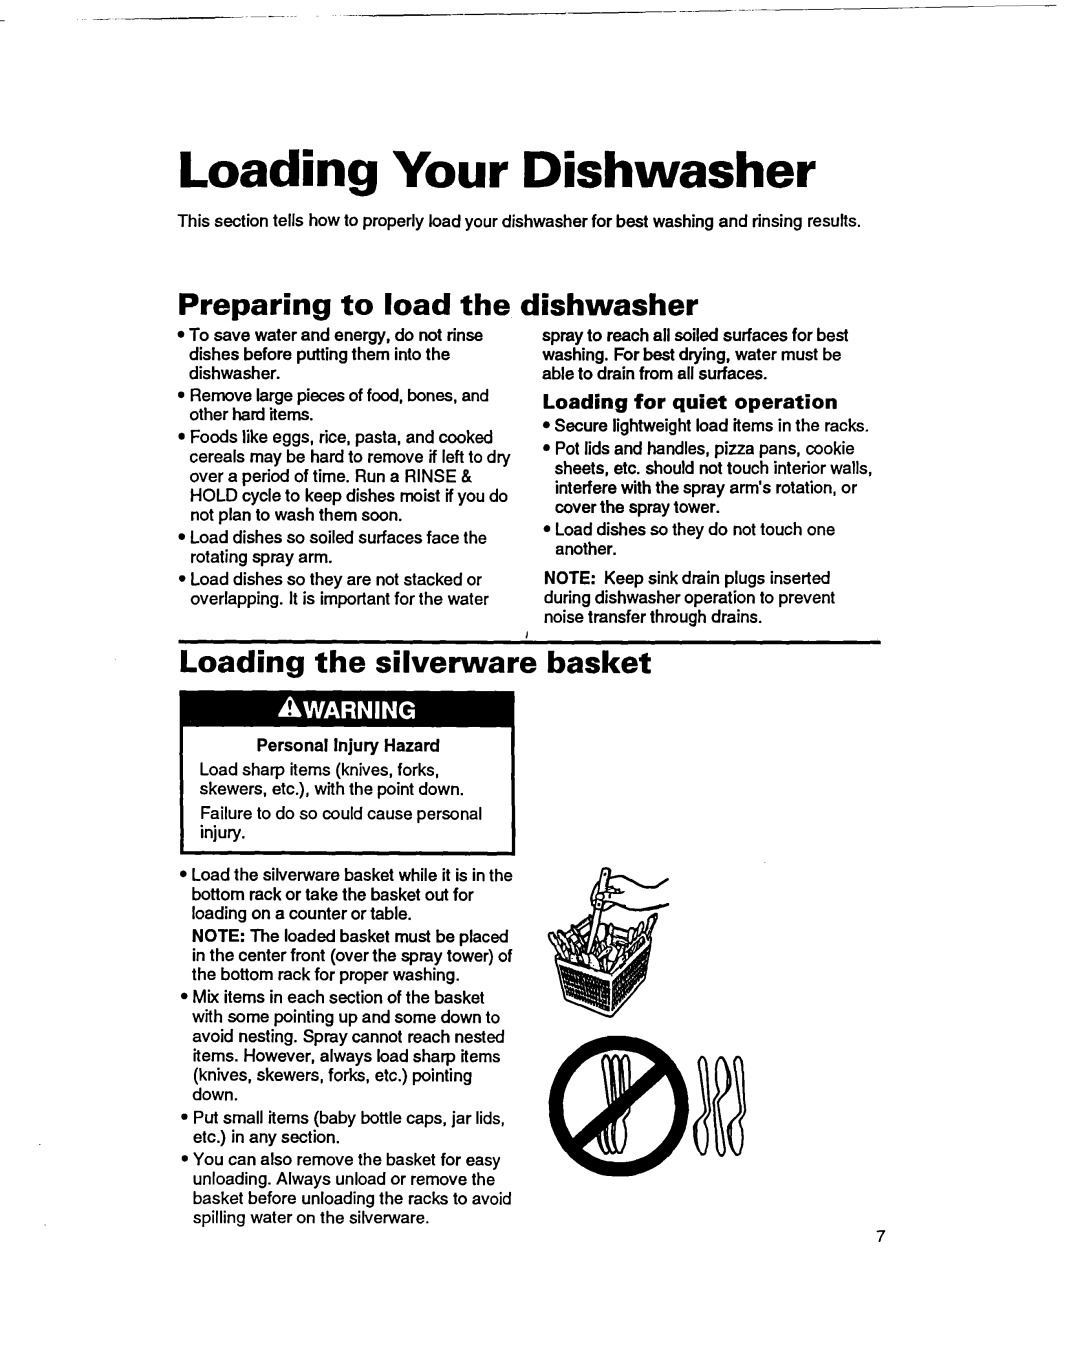 Whirlpool 400 warranty Loading Your Dishwasher, Preparing to load the, dishwasher, Loading the silverware basket 